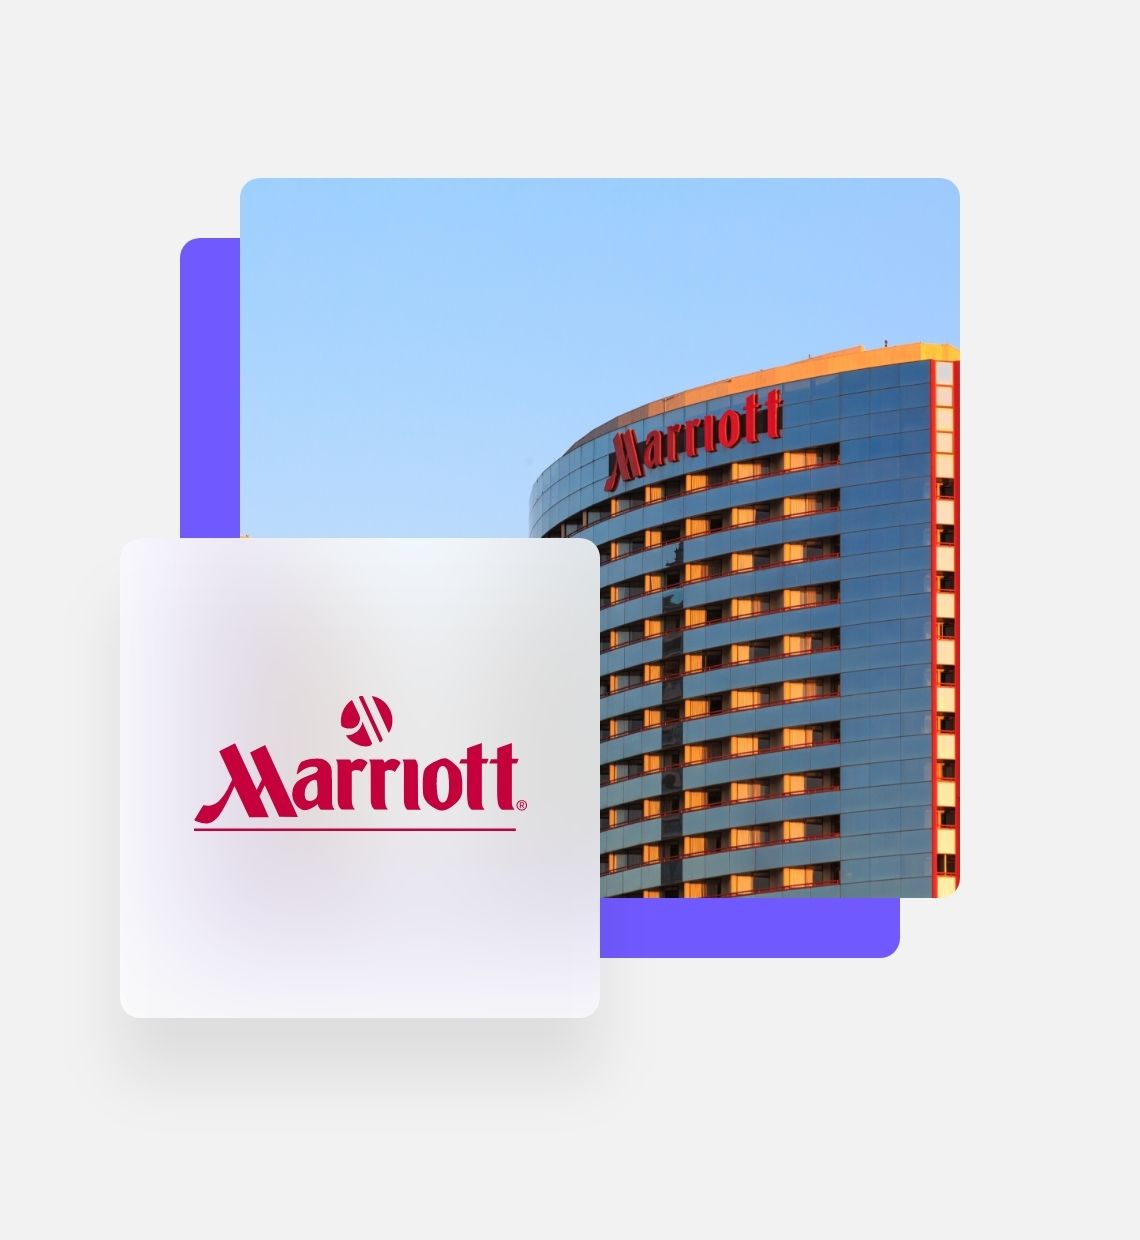 Marriott logo with hotel